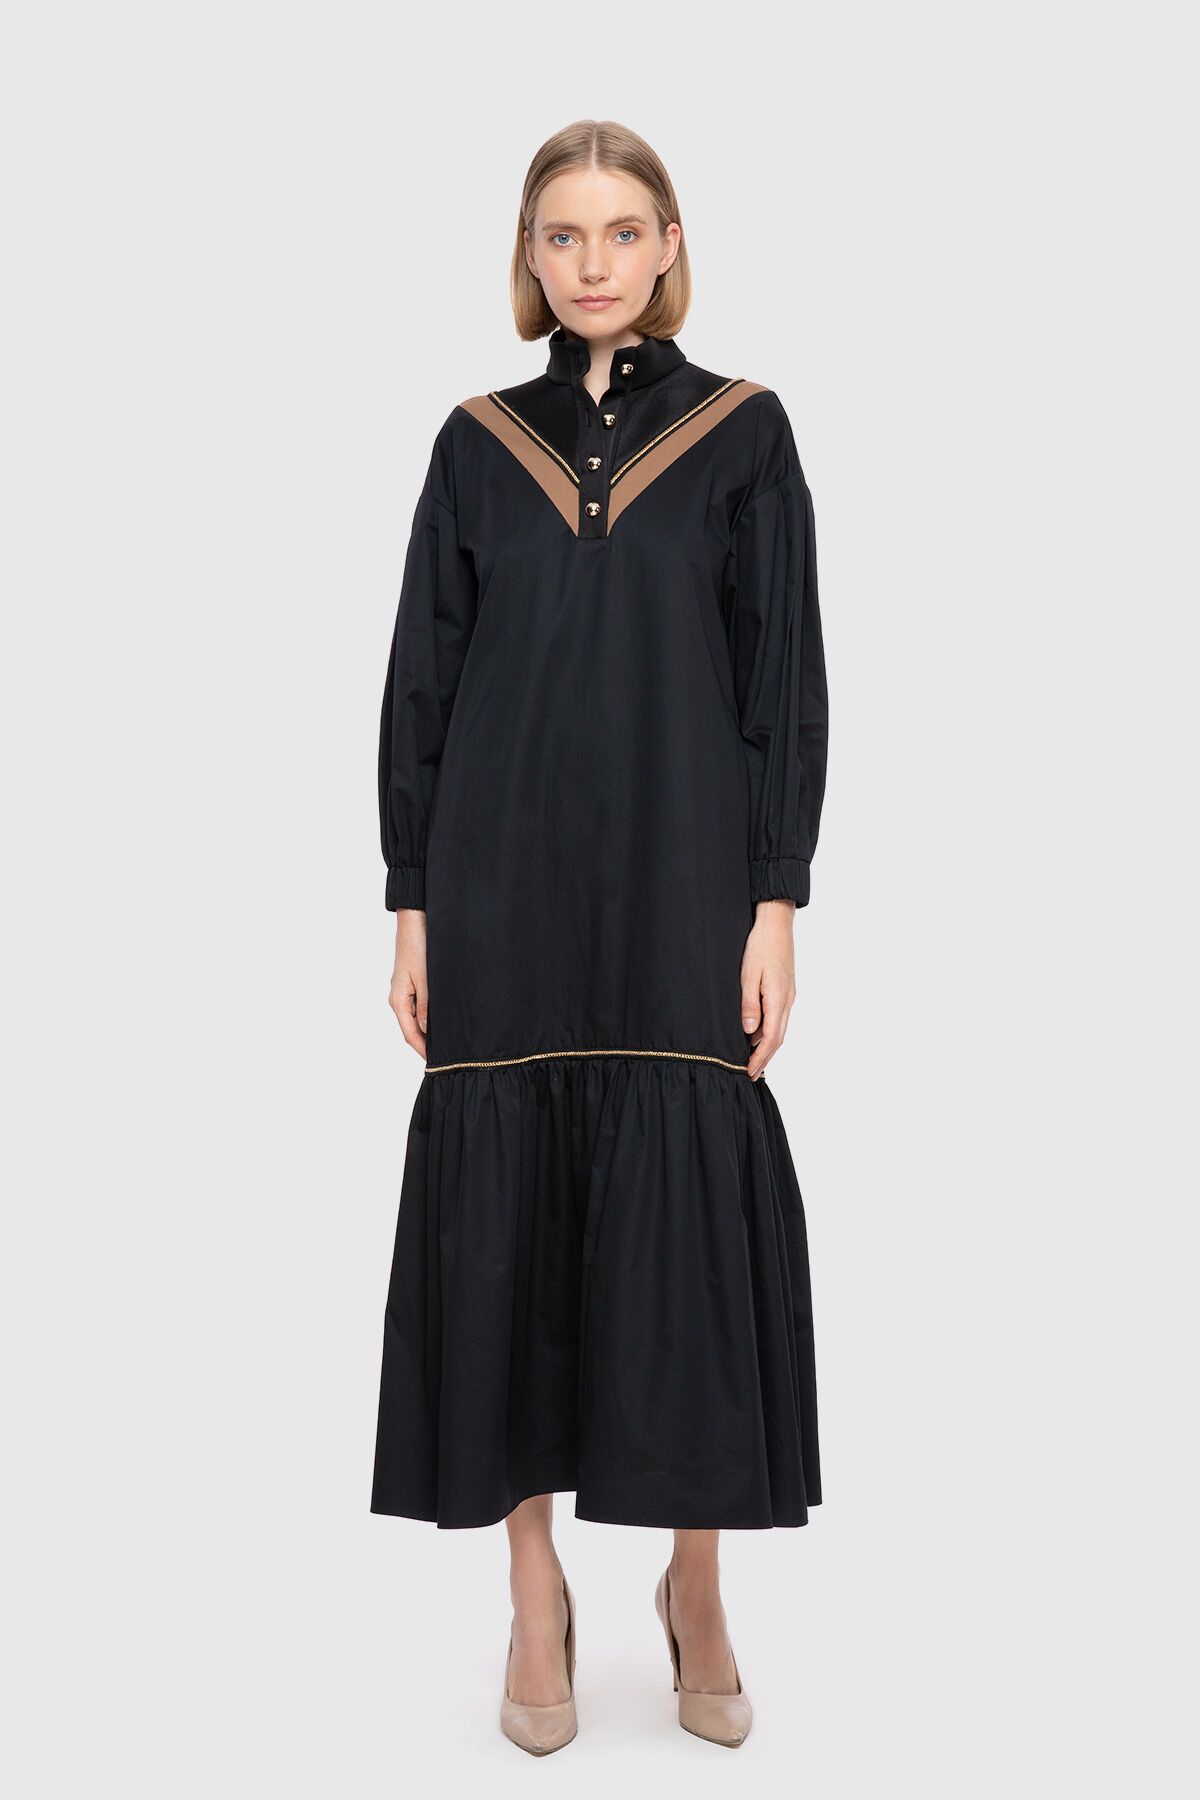 GIZIA SPORT - Contrast Detailed Pleated Black Midi Dress